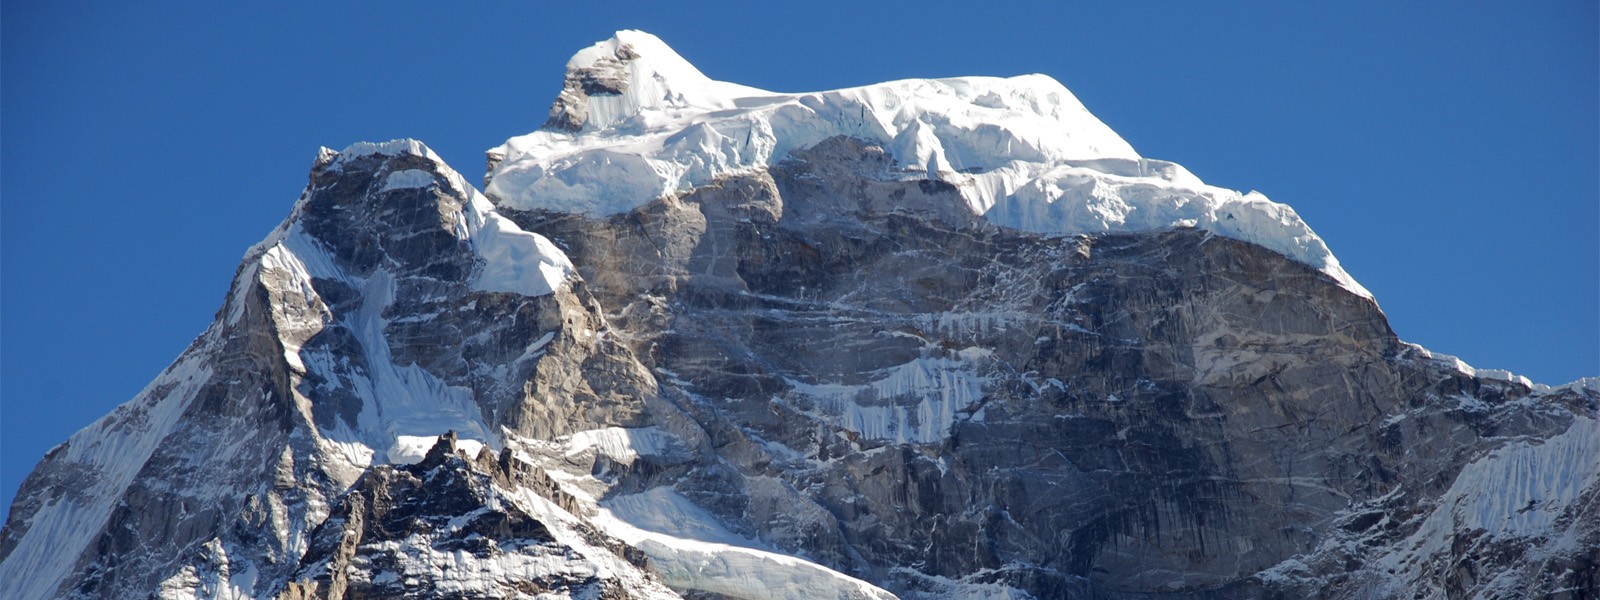 Mt. Kangtega Expedition in Khumbu Region